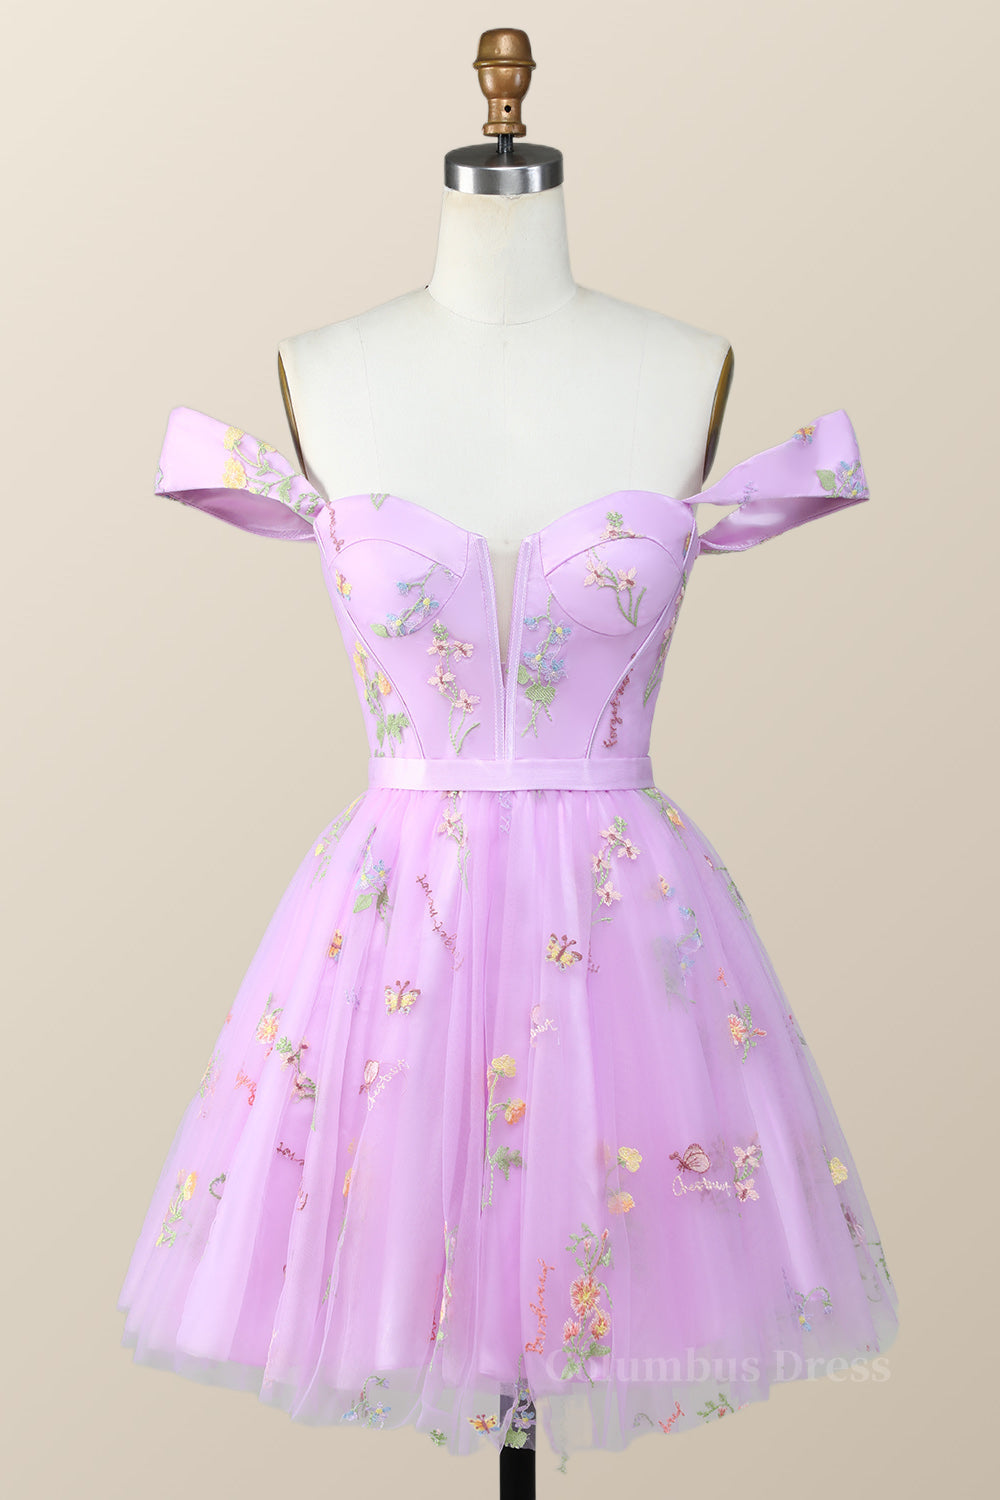 Green Bridesmaid Dress, Off the Shoulder Lavender Floral Embroidered Short Homecoming Dress